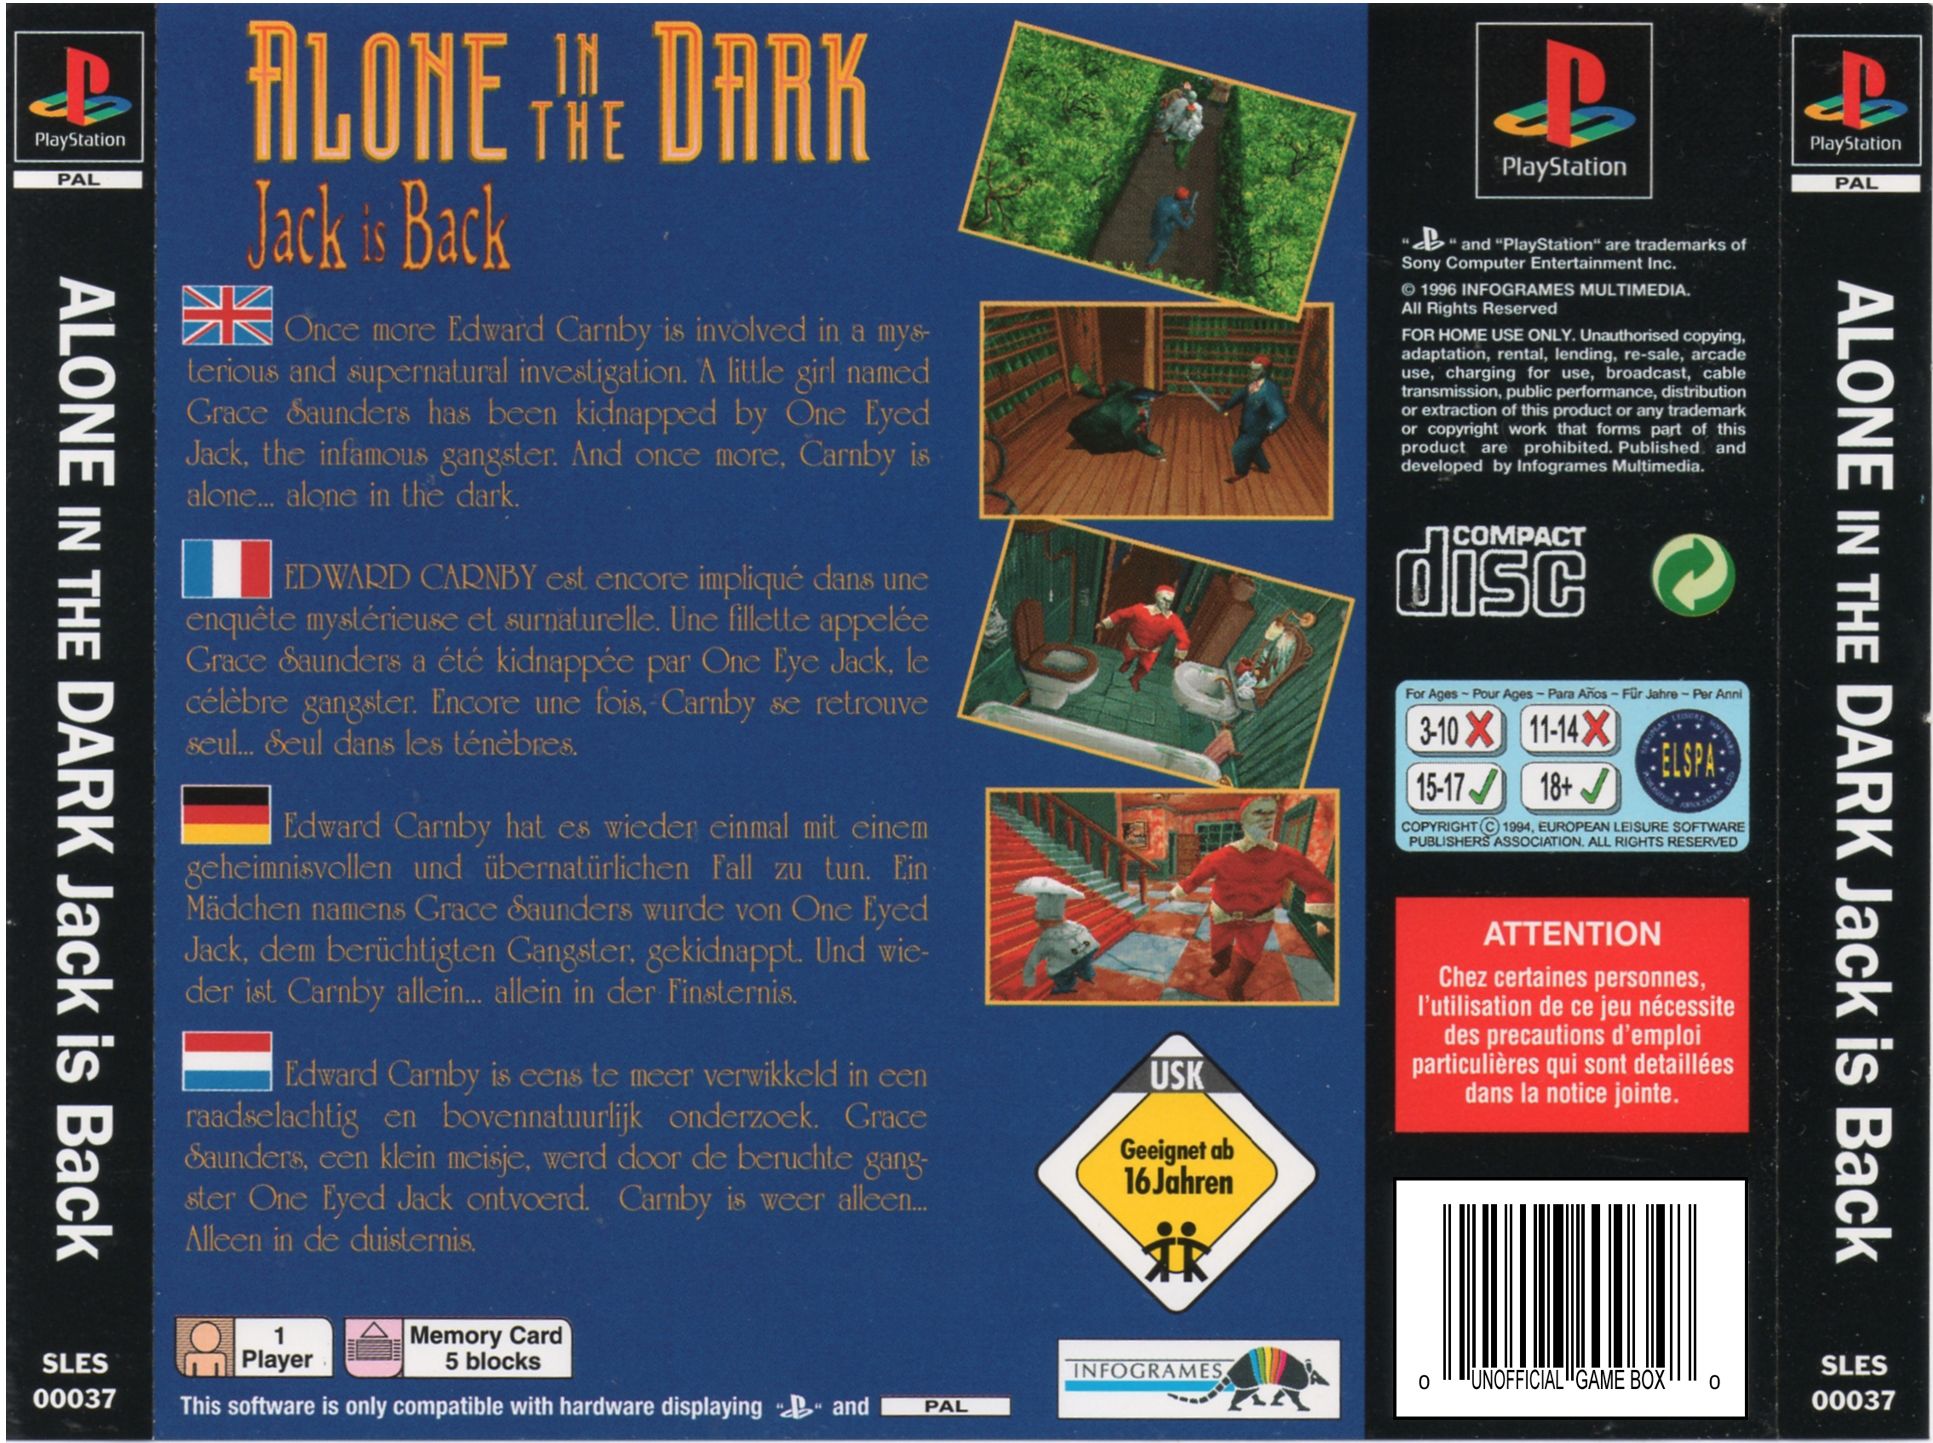 Alone in the Dark 2 PSX cover